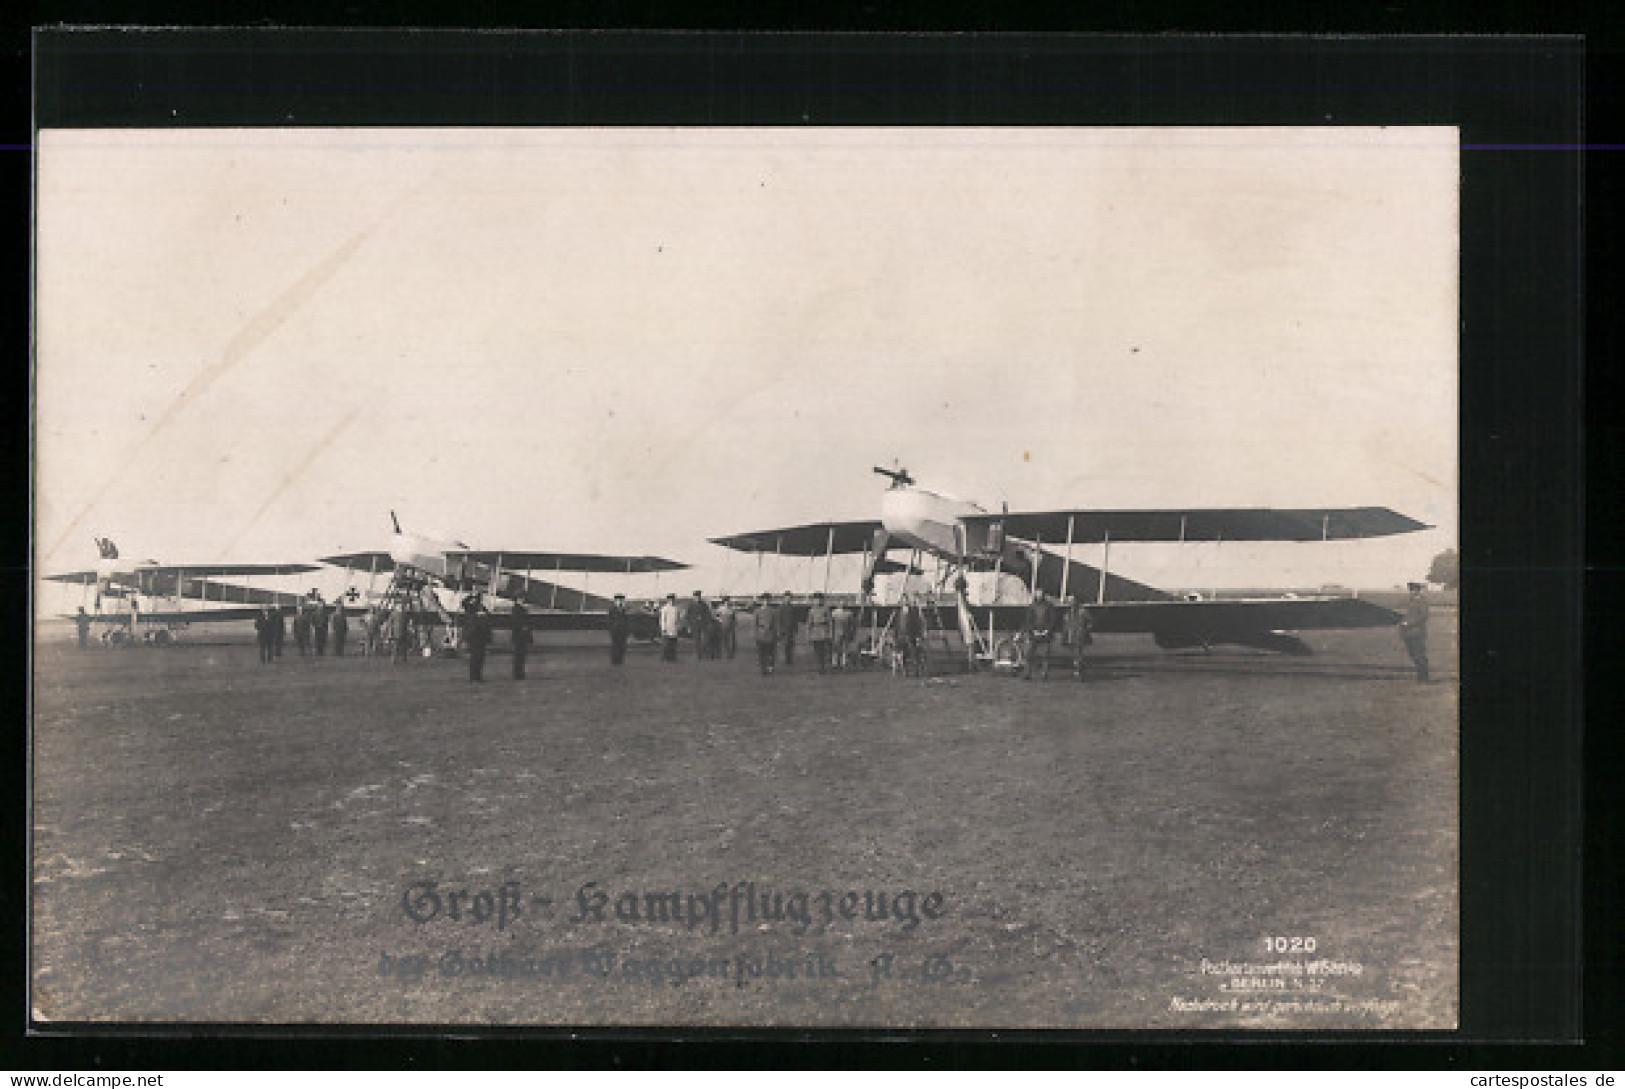 Foto-AK Sanke Nr. 1020: Gross-Kampfflugzeuge Der Gothaer Waggonfabrik  - 1914-1918: 1st War